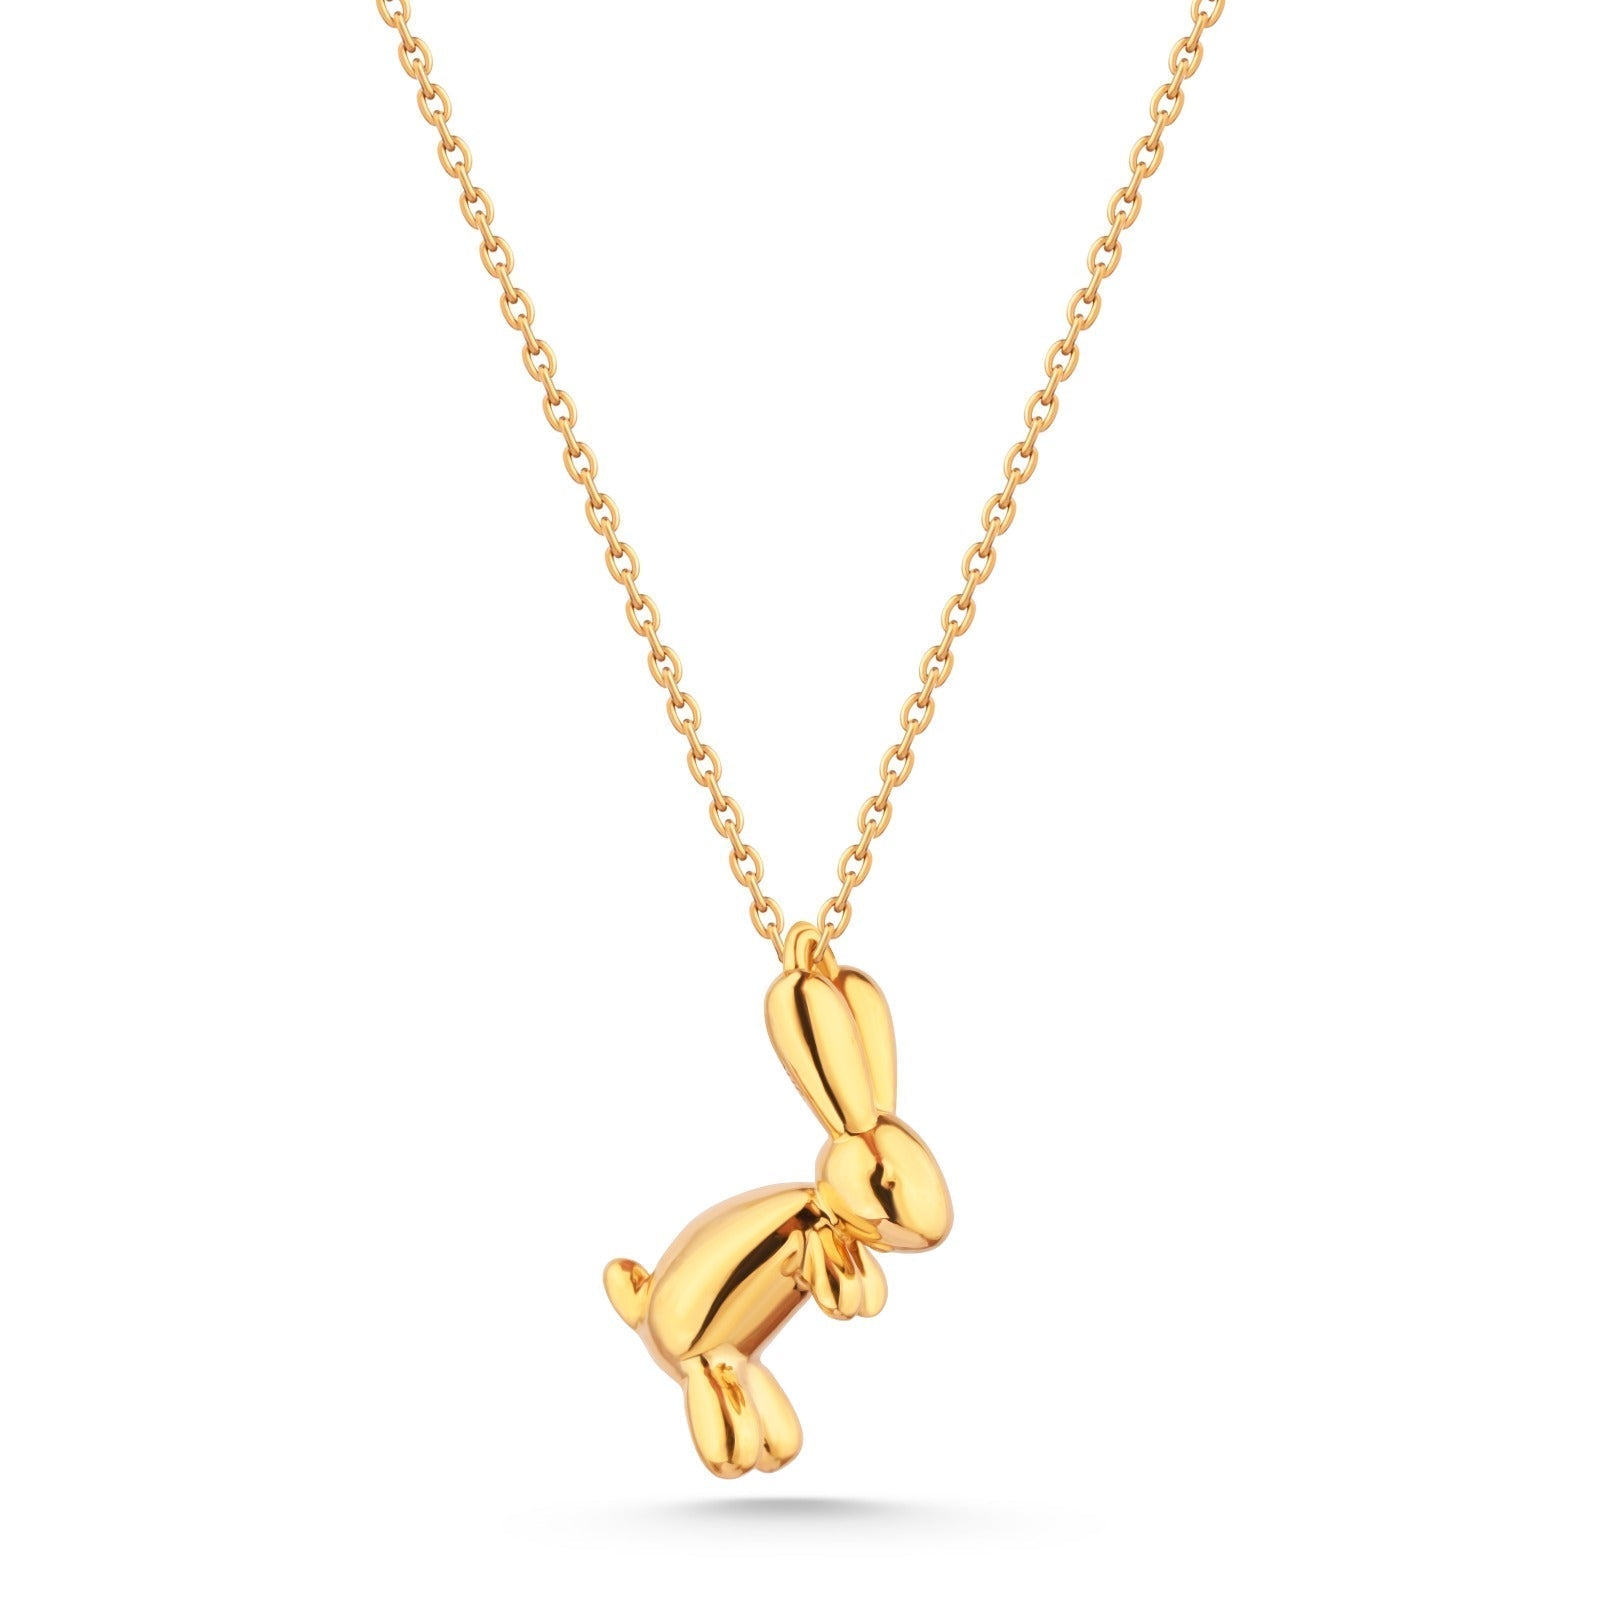 Balloon rabbit in 18k Gold necklace - j-p032gb